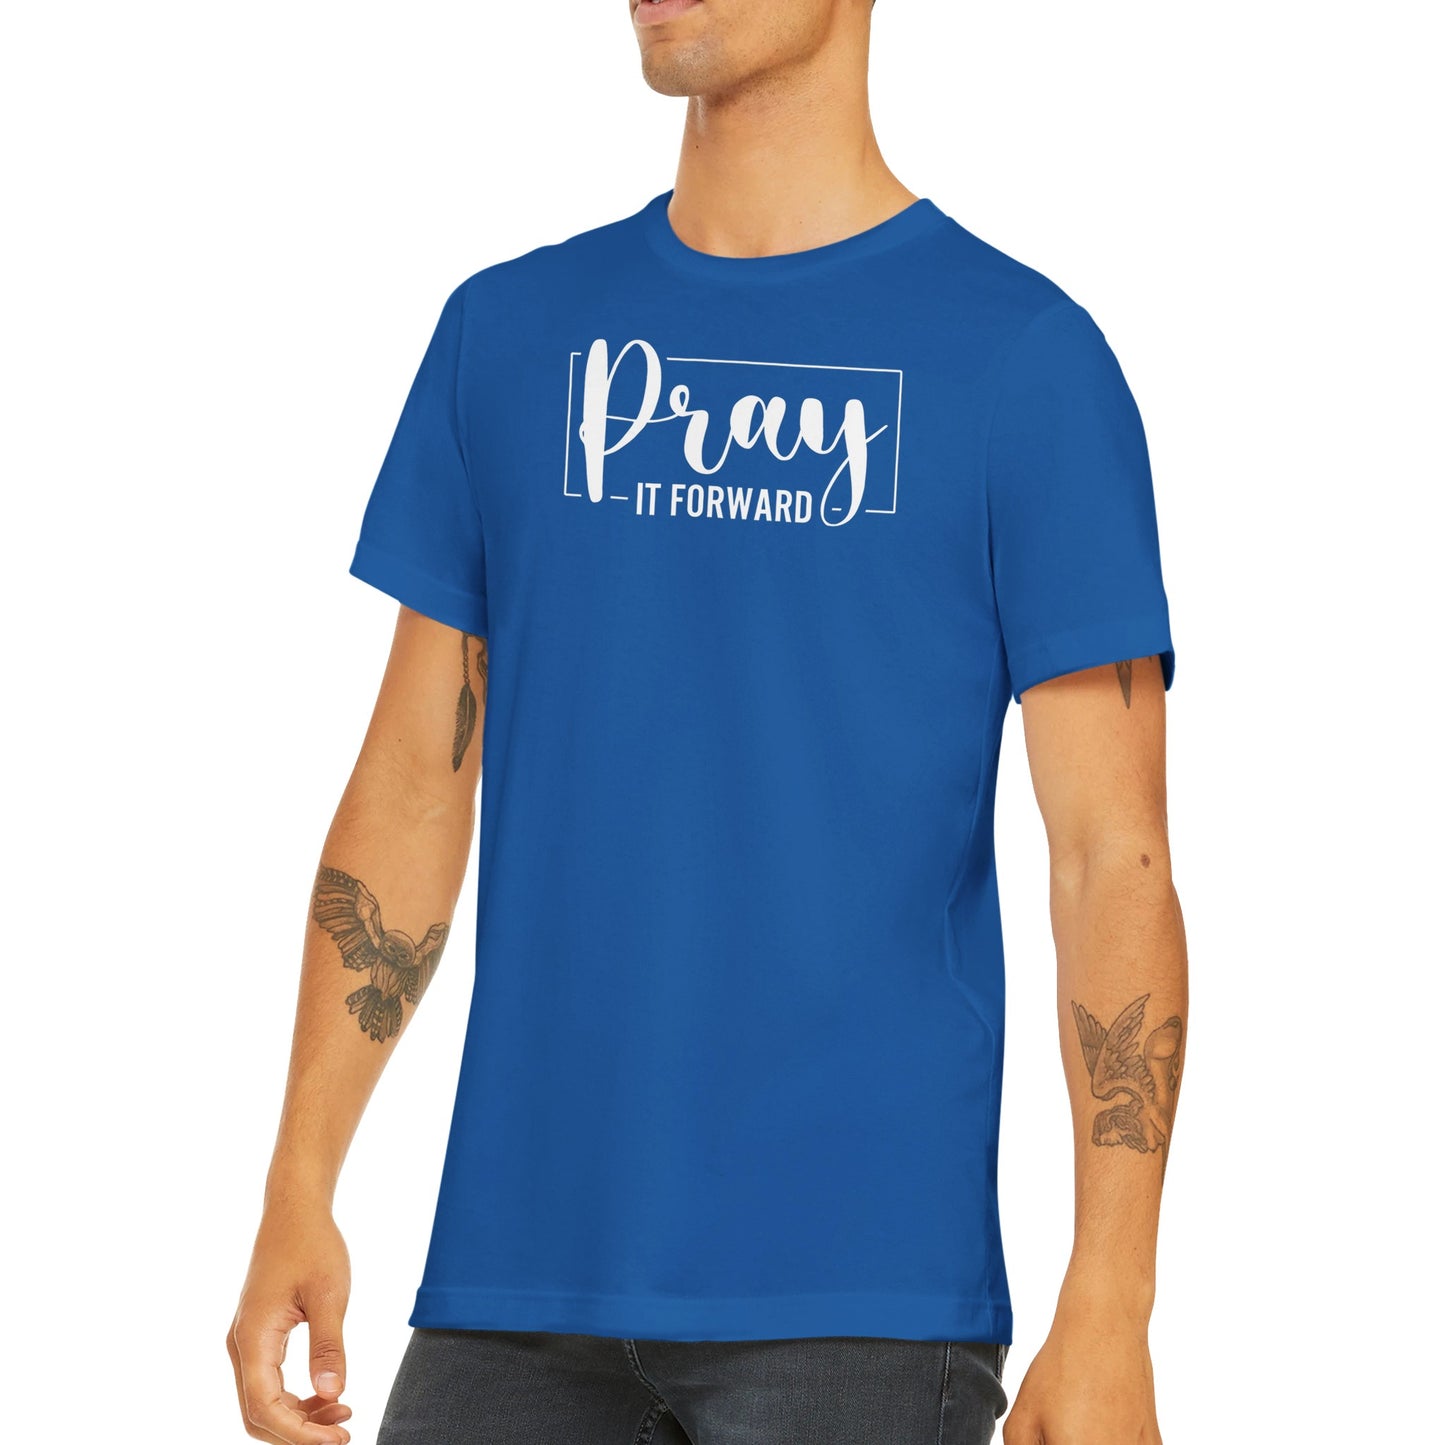 "Pray It Forward" - Premium Cotton Christian T-Shirt